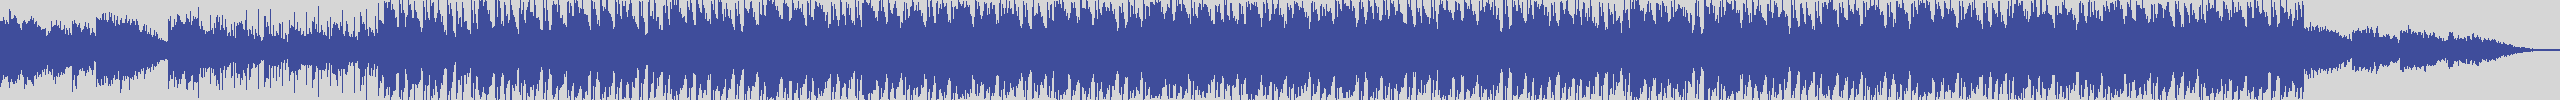 vitti_records [VIT020] Clam Clam - Piers [Original Mix] audio wave form